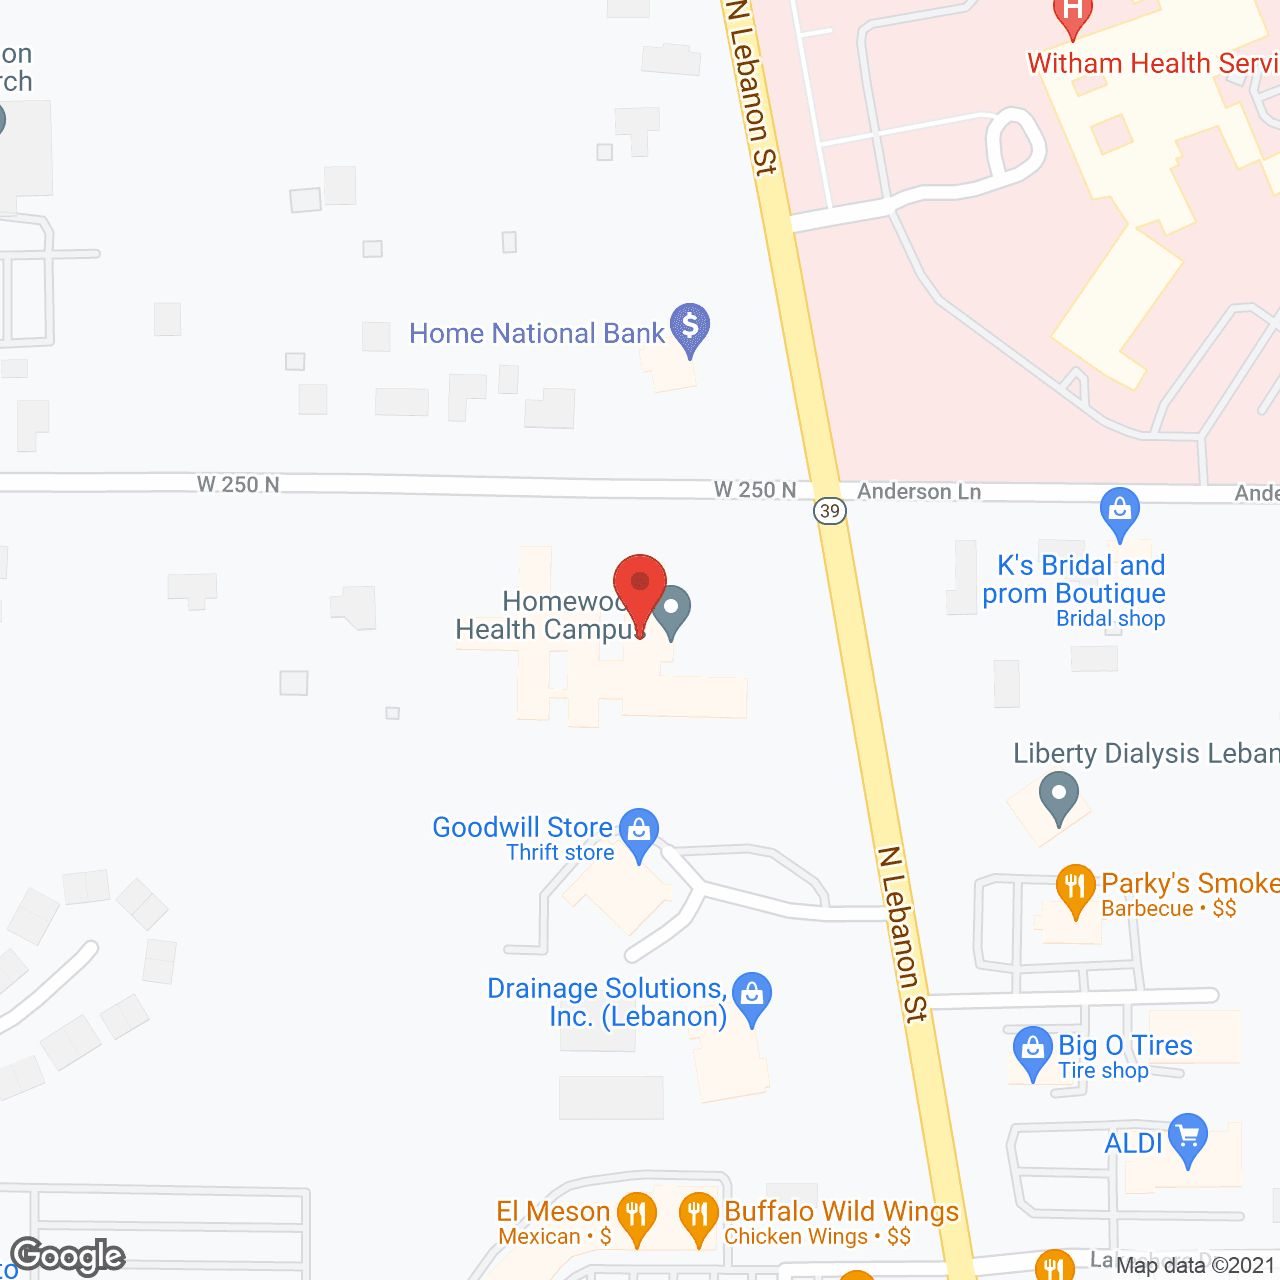 Homewood Health Campus in google map